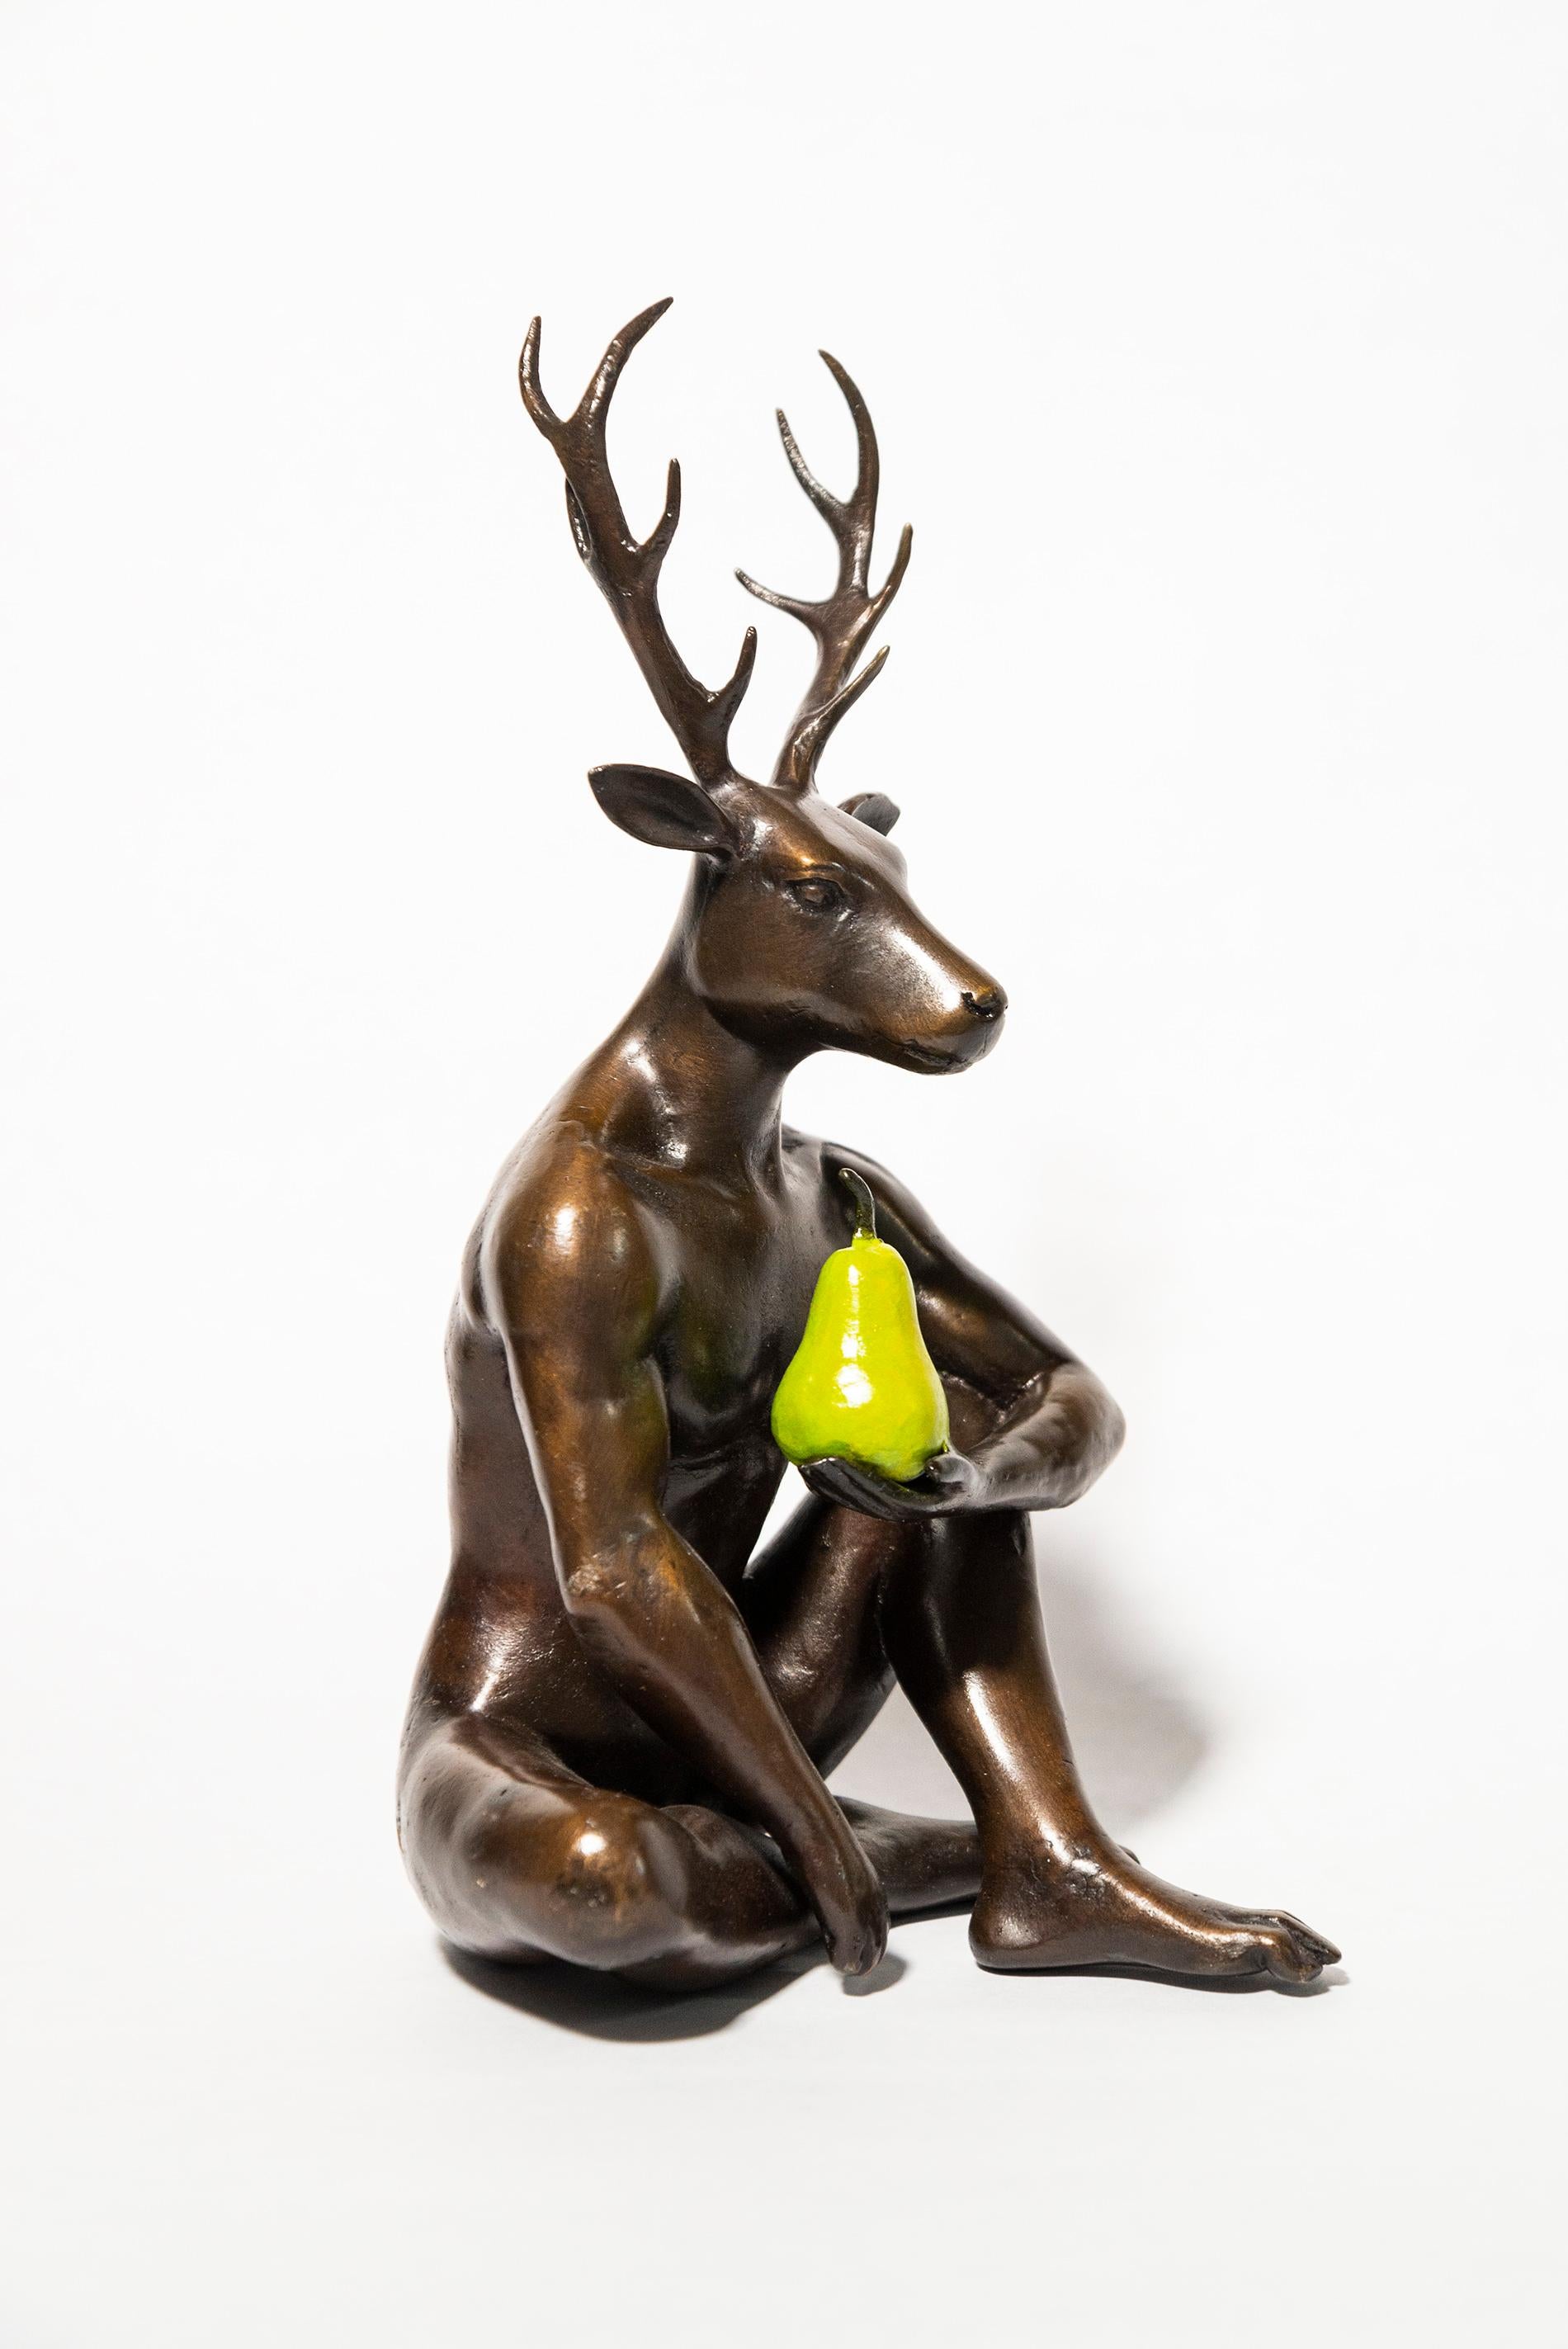 Deerman grew a pear 19/25 - figurative, playful, contemporary, bronze sculpture - Sculpture by Gillie and Marc Schattner